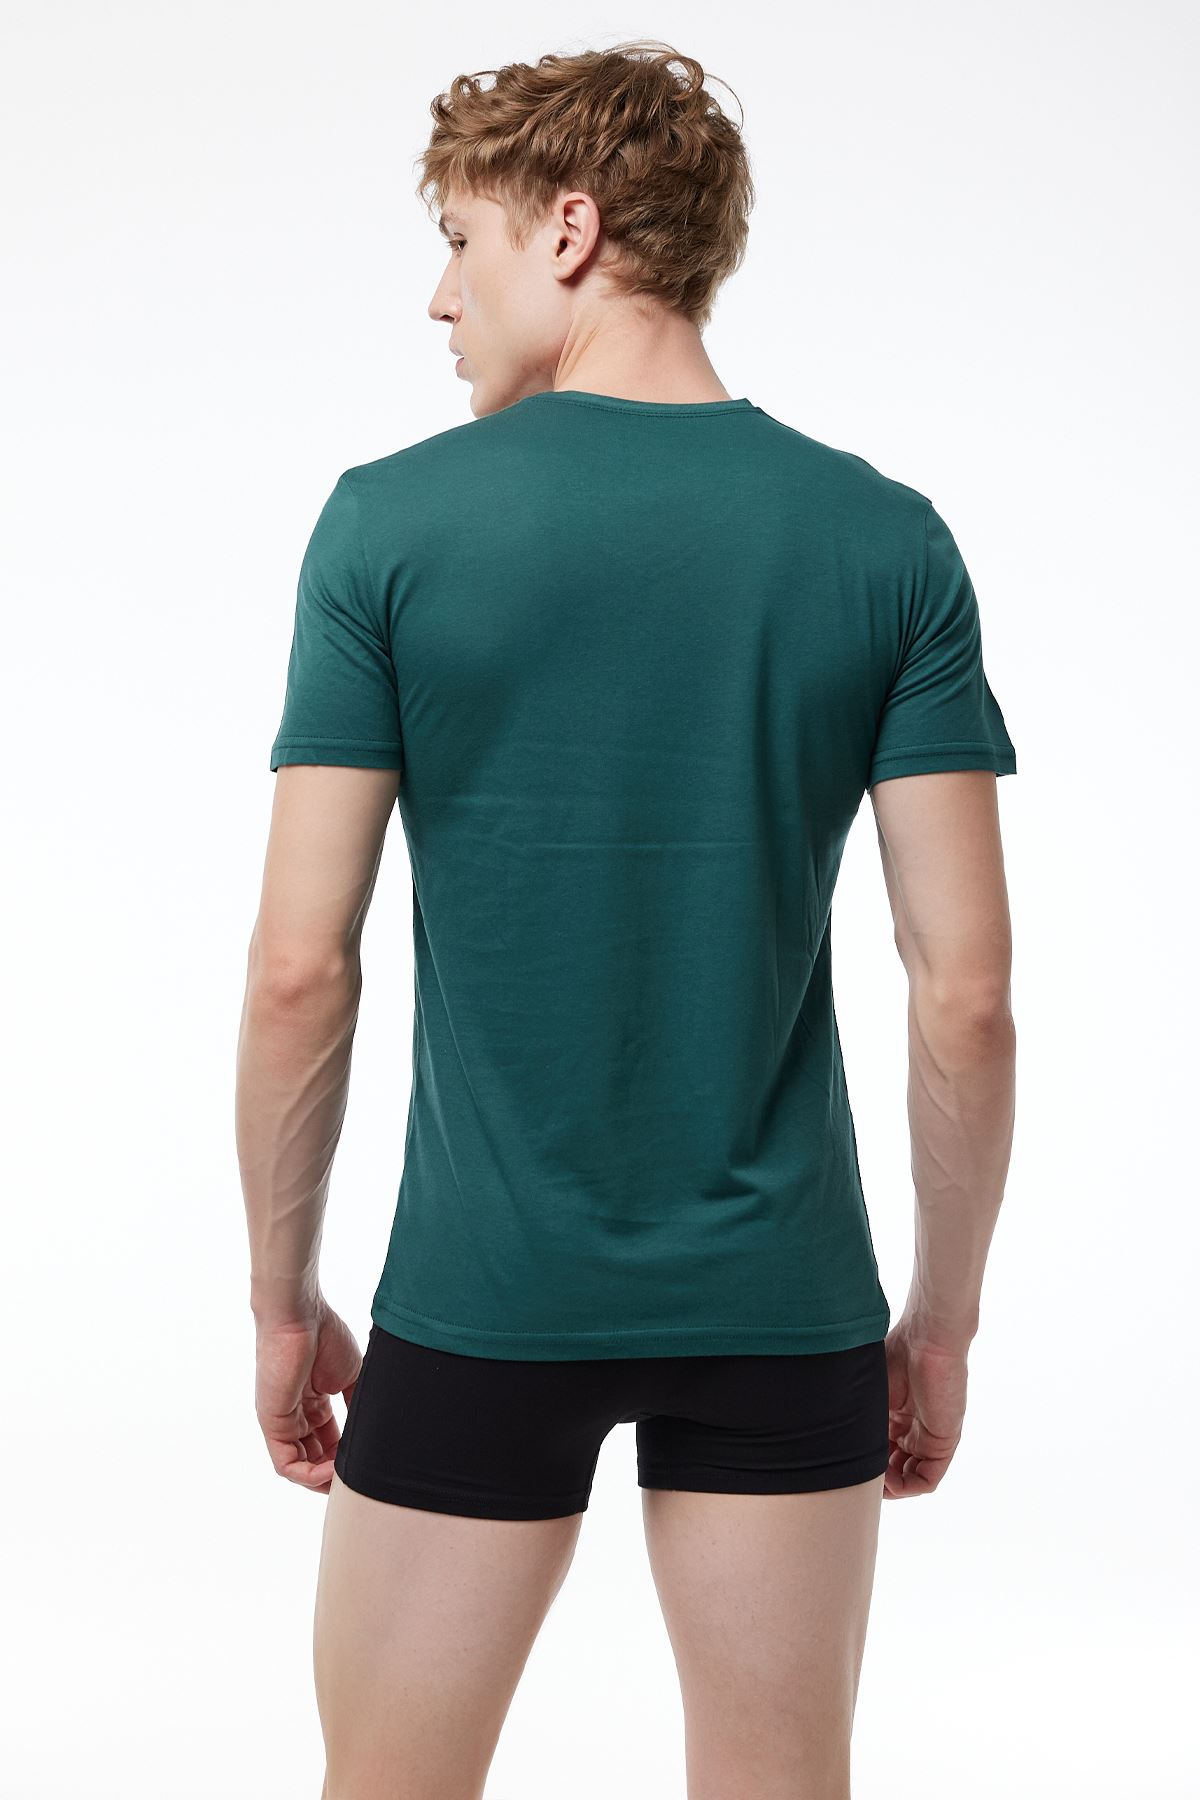 Erkek Yeşil 3 Lü Paket Basic V Yaka İnce Modal Yaz Serinliği Tshirt 3M085